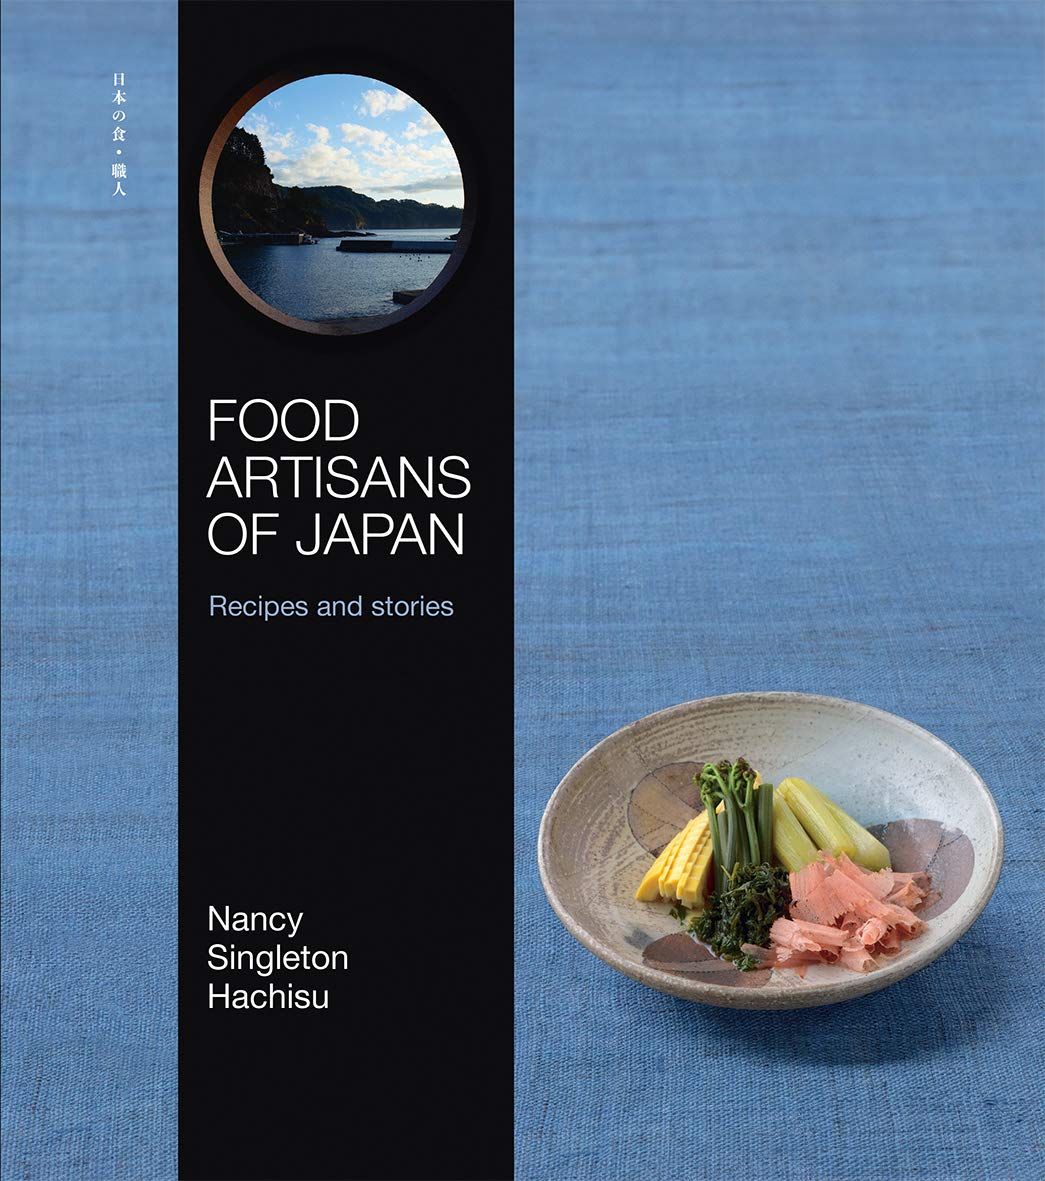 Food Artisans of Japan : Recipes and stories ร้านหนังสือและสิ่งของ เป็นร้านหนังสือภาษาอังกฤษหายาก และร้านกาแฟ หรือ บุ๊คคาเฟ่ ตั้งอยู่สุขุมวิท กรุงเทพ